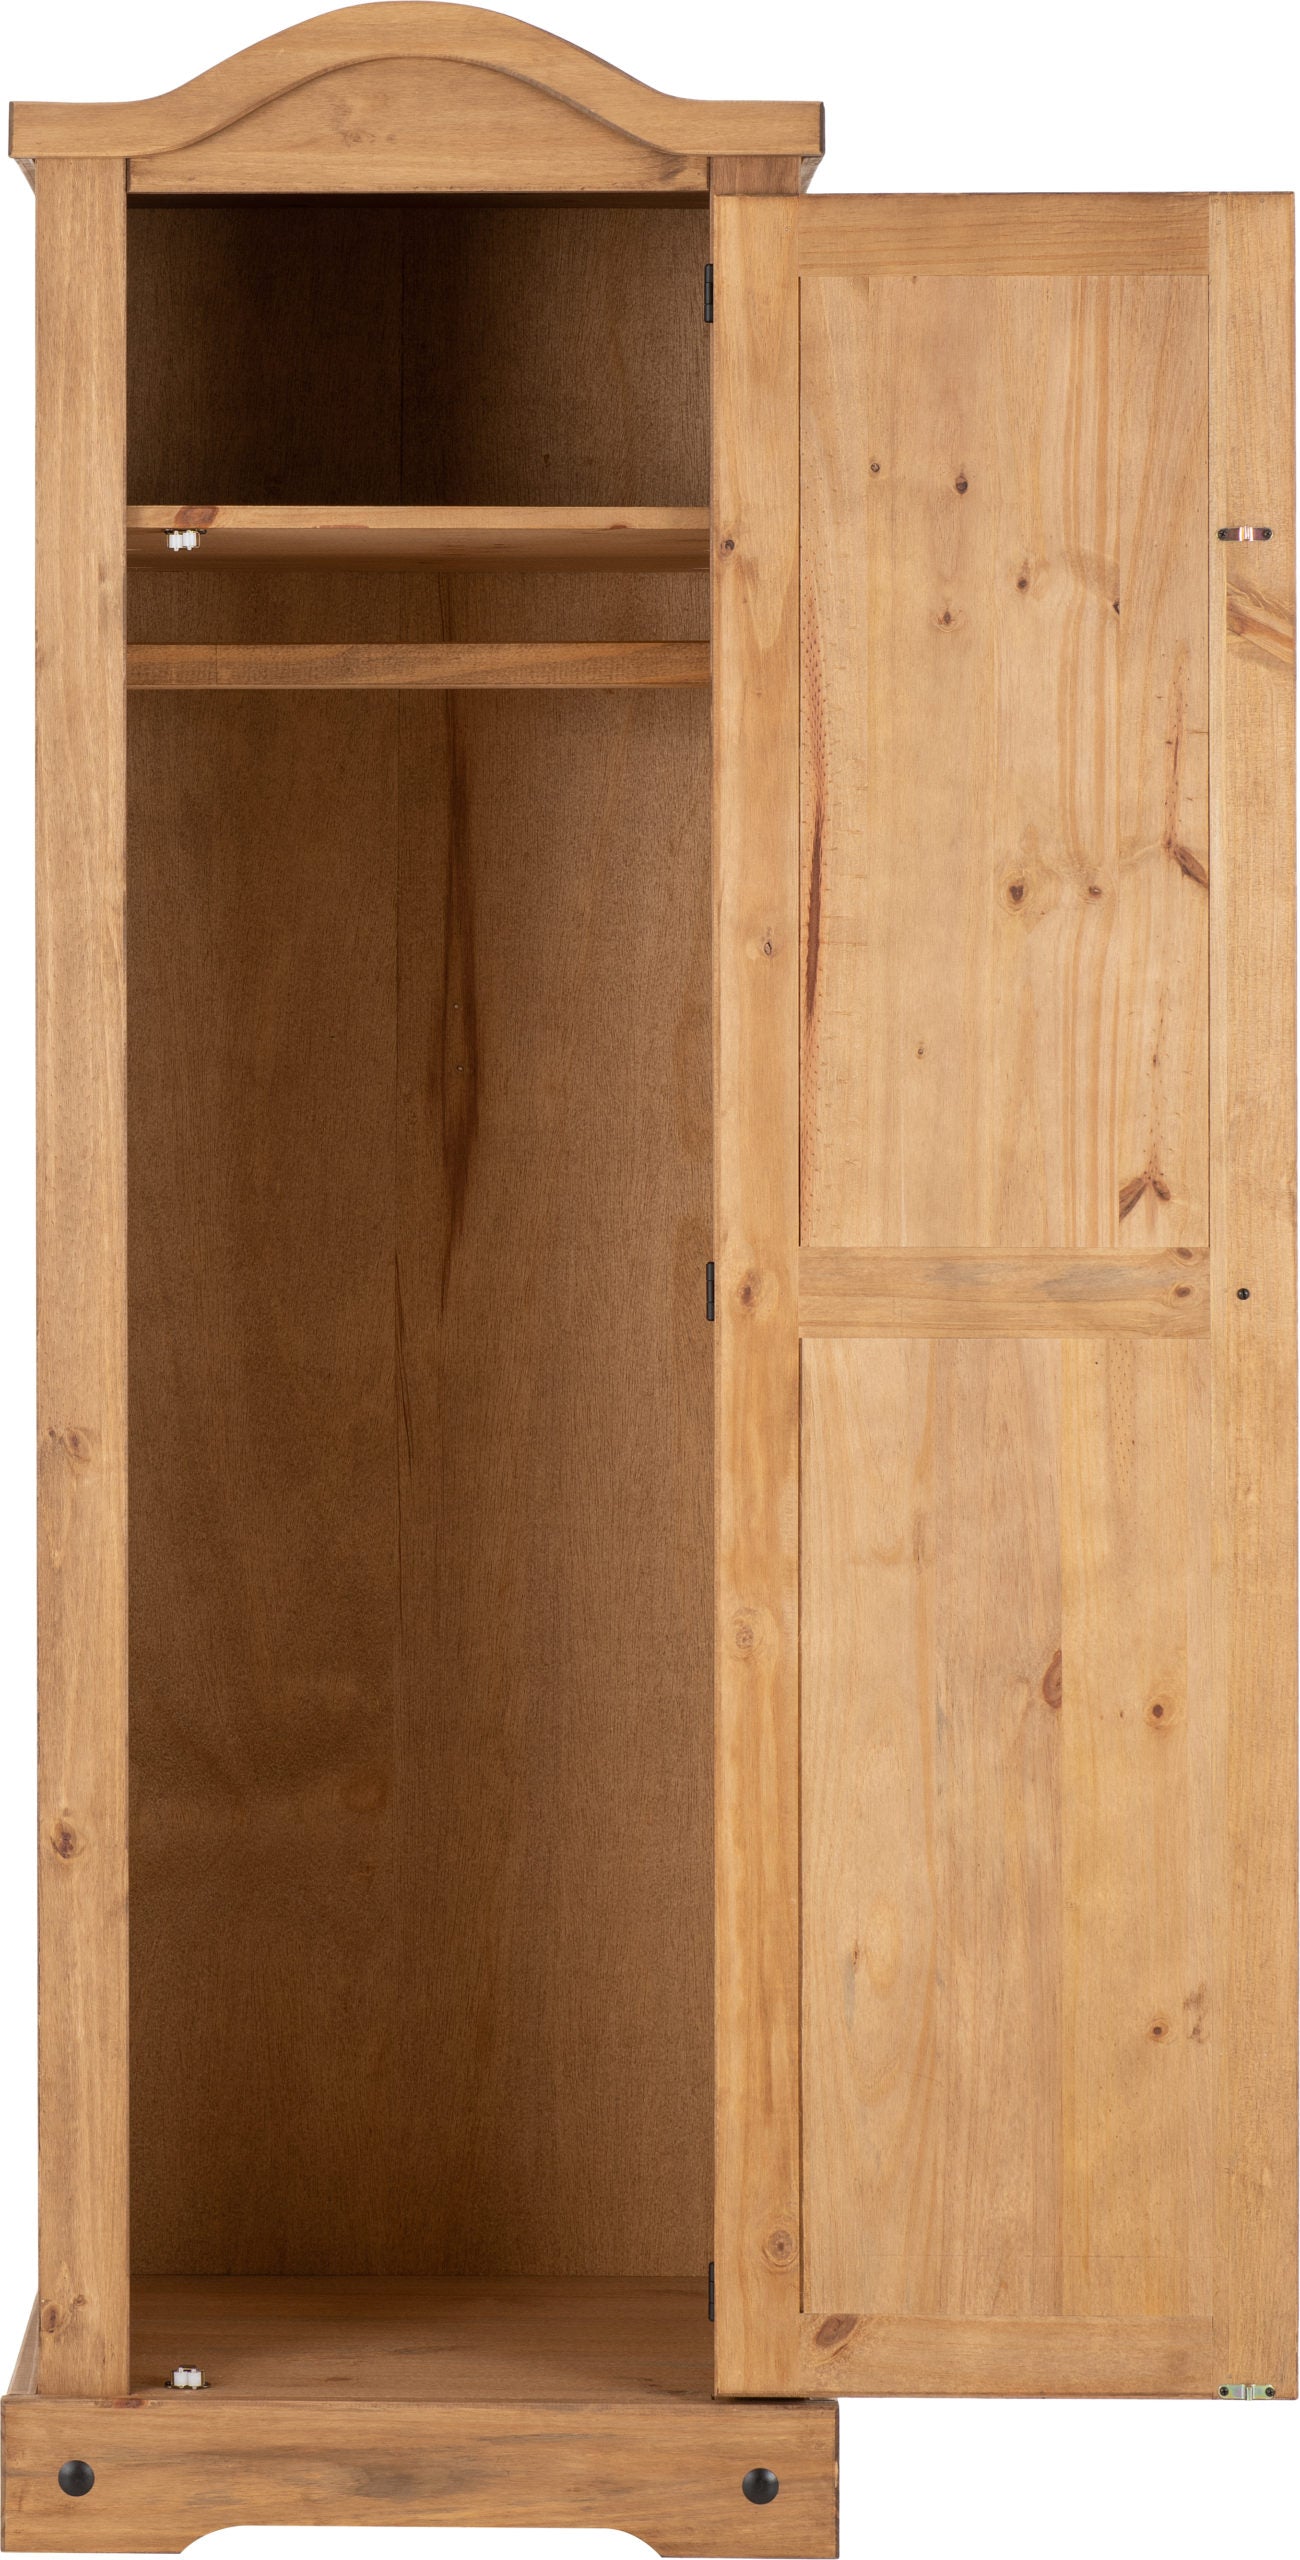 1 door wardrobe with drawers